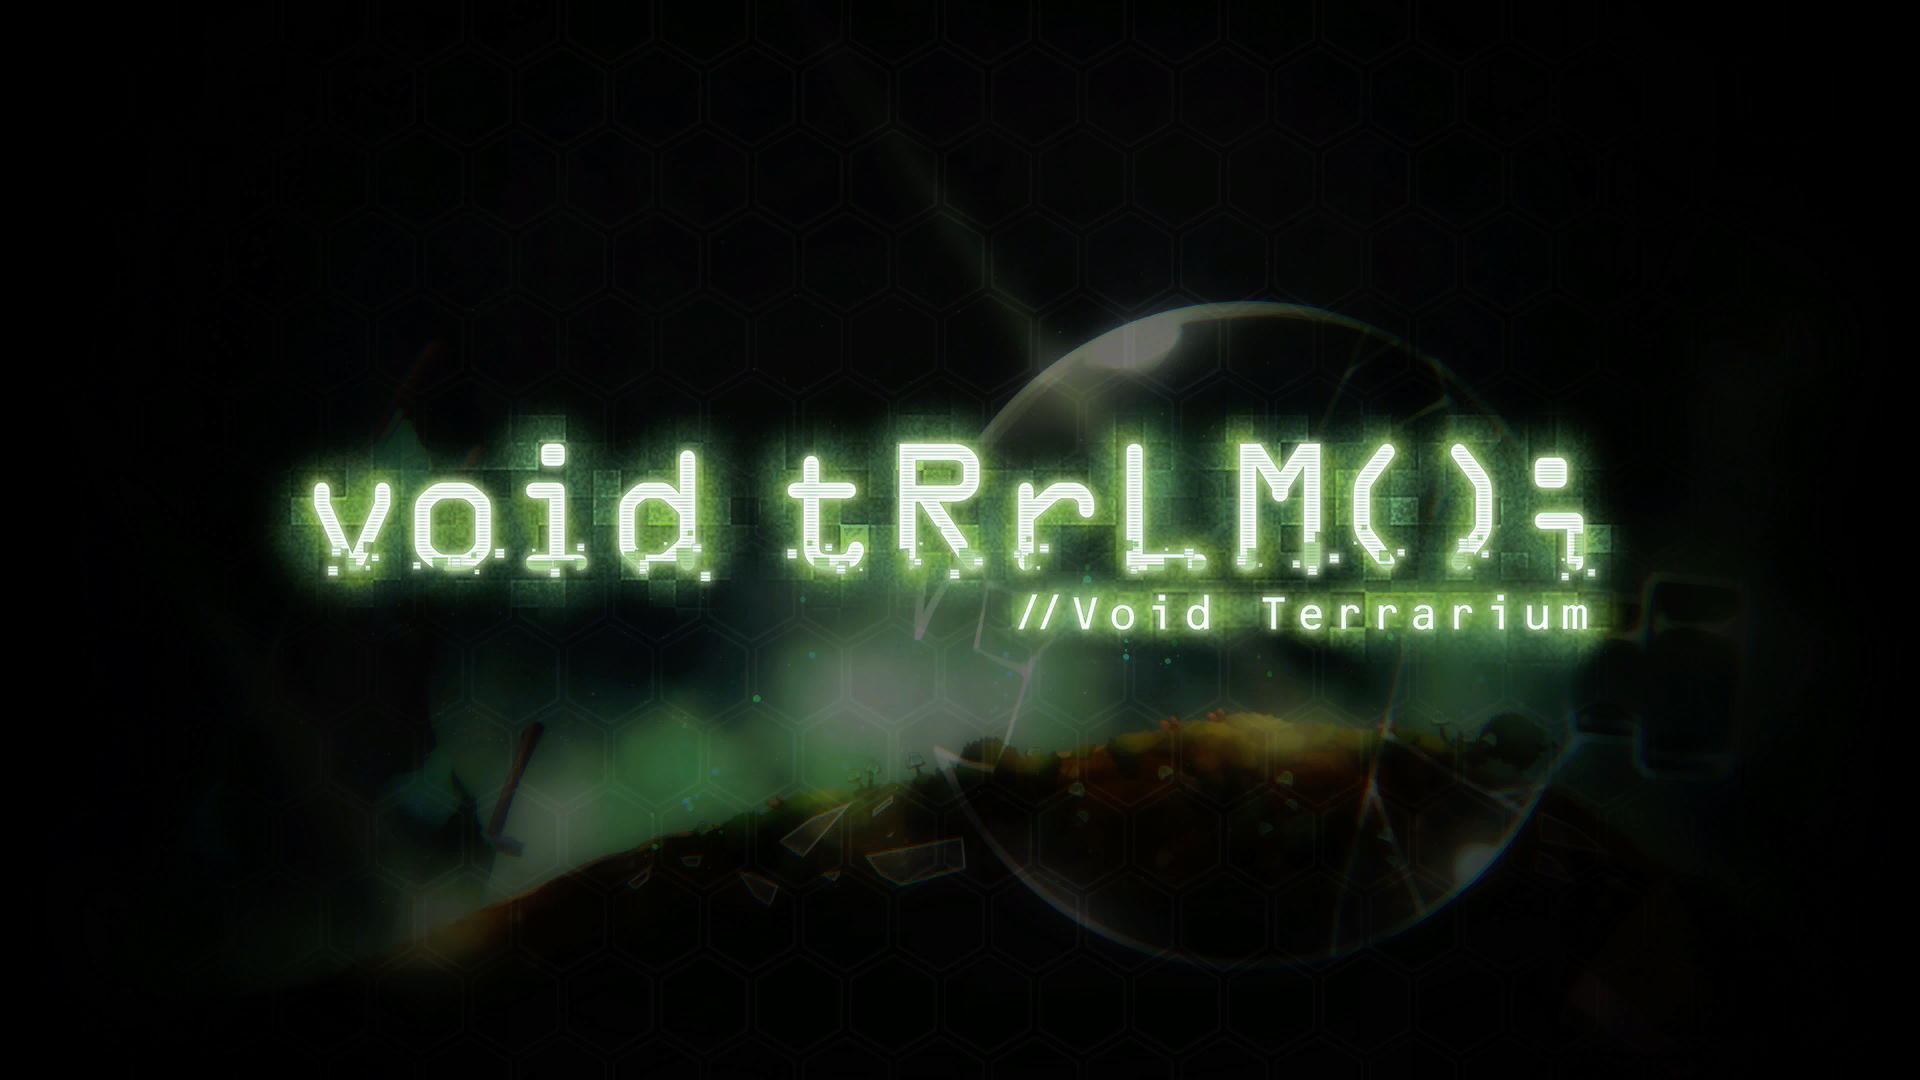 void tRrLM(); //Void Terrarium Review